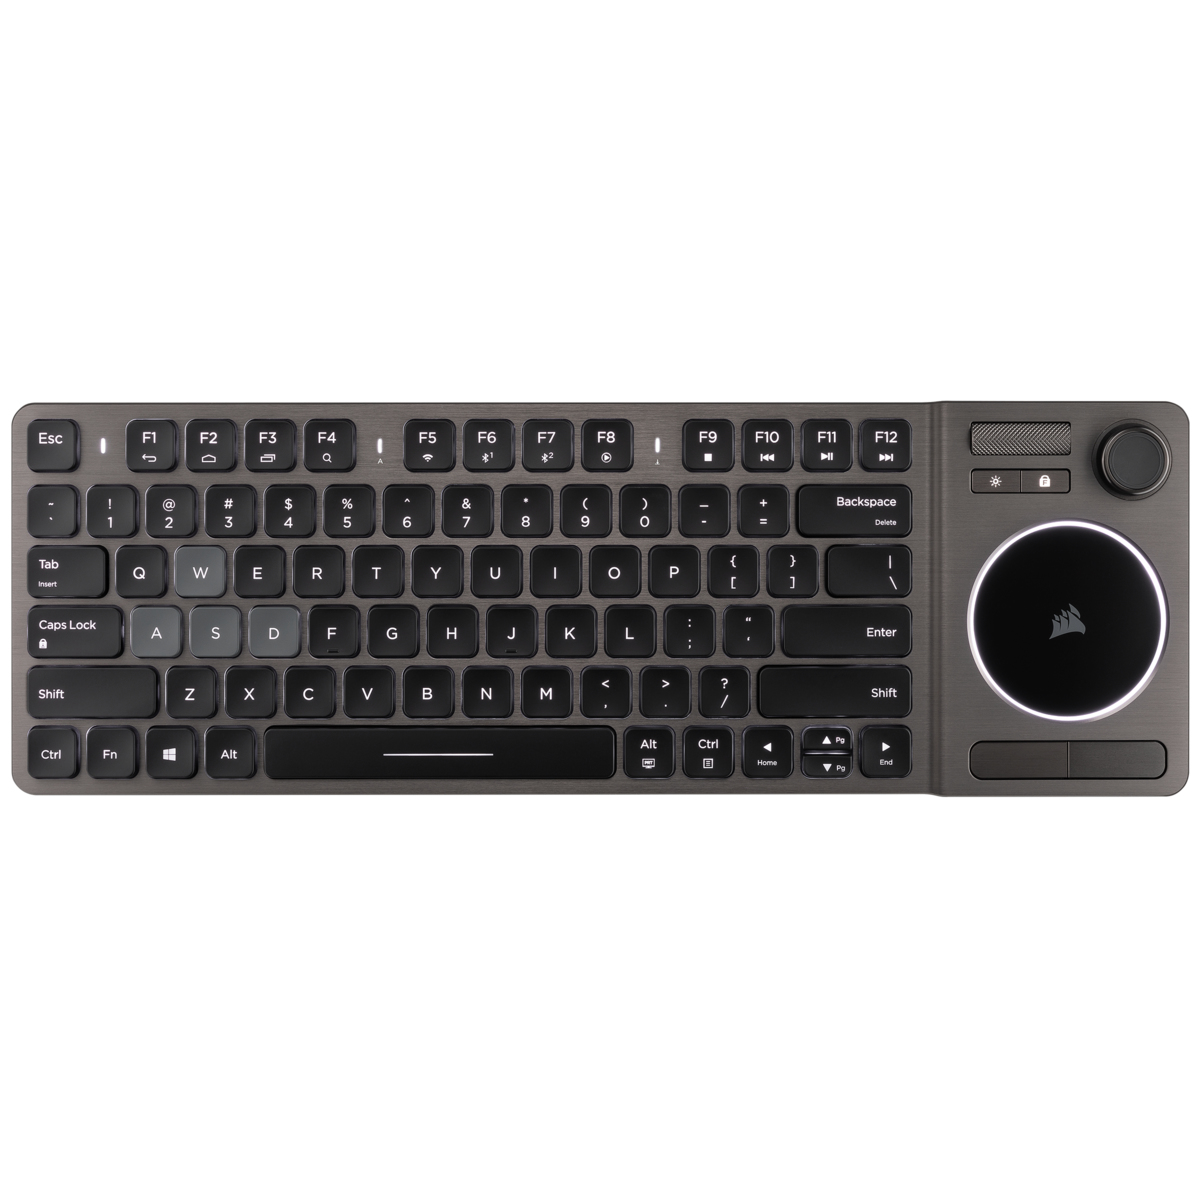 Corsair K83 Wireless Entertainment Keyboard